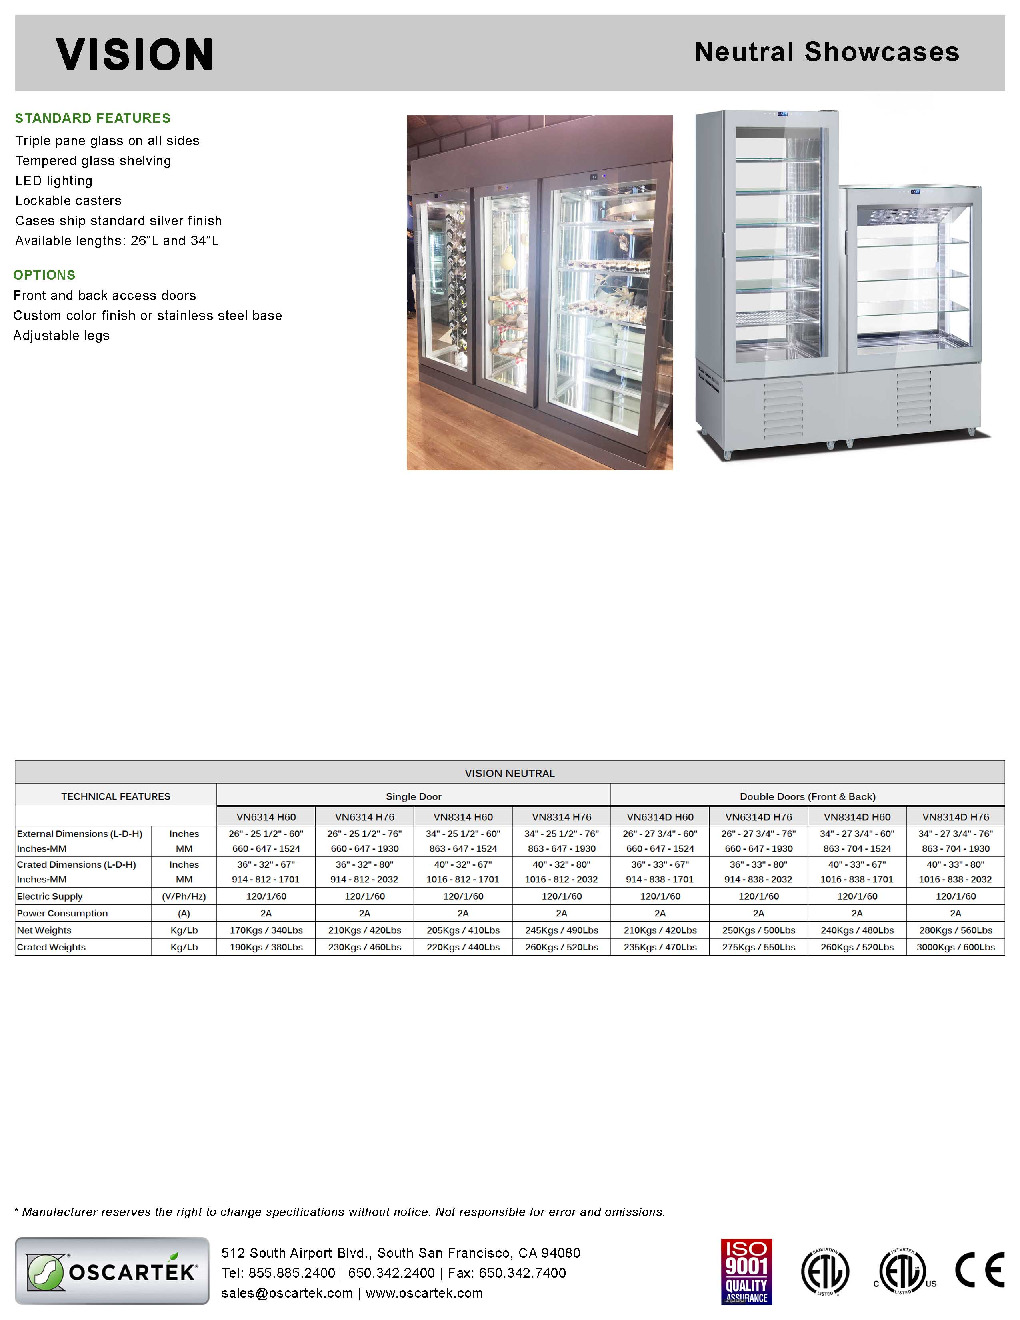 Oscartek VISION VN8314D H60 Non-Refrigerated Bakery Display Case